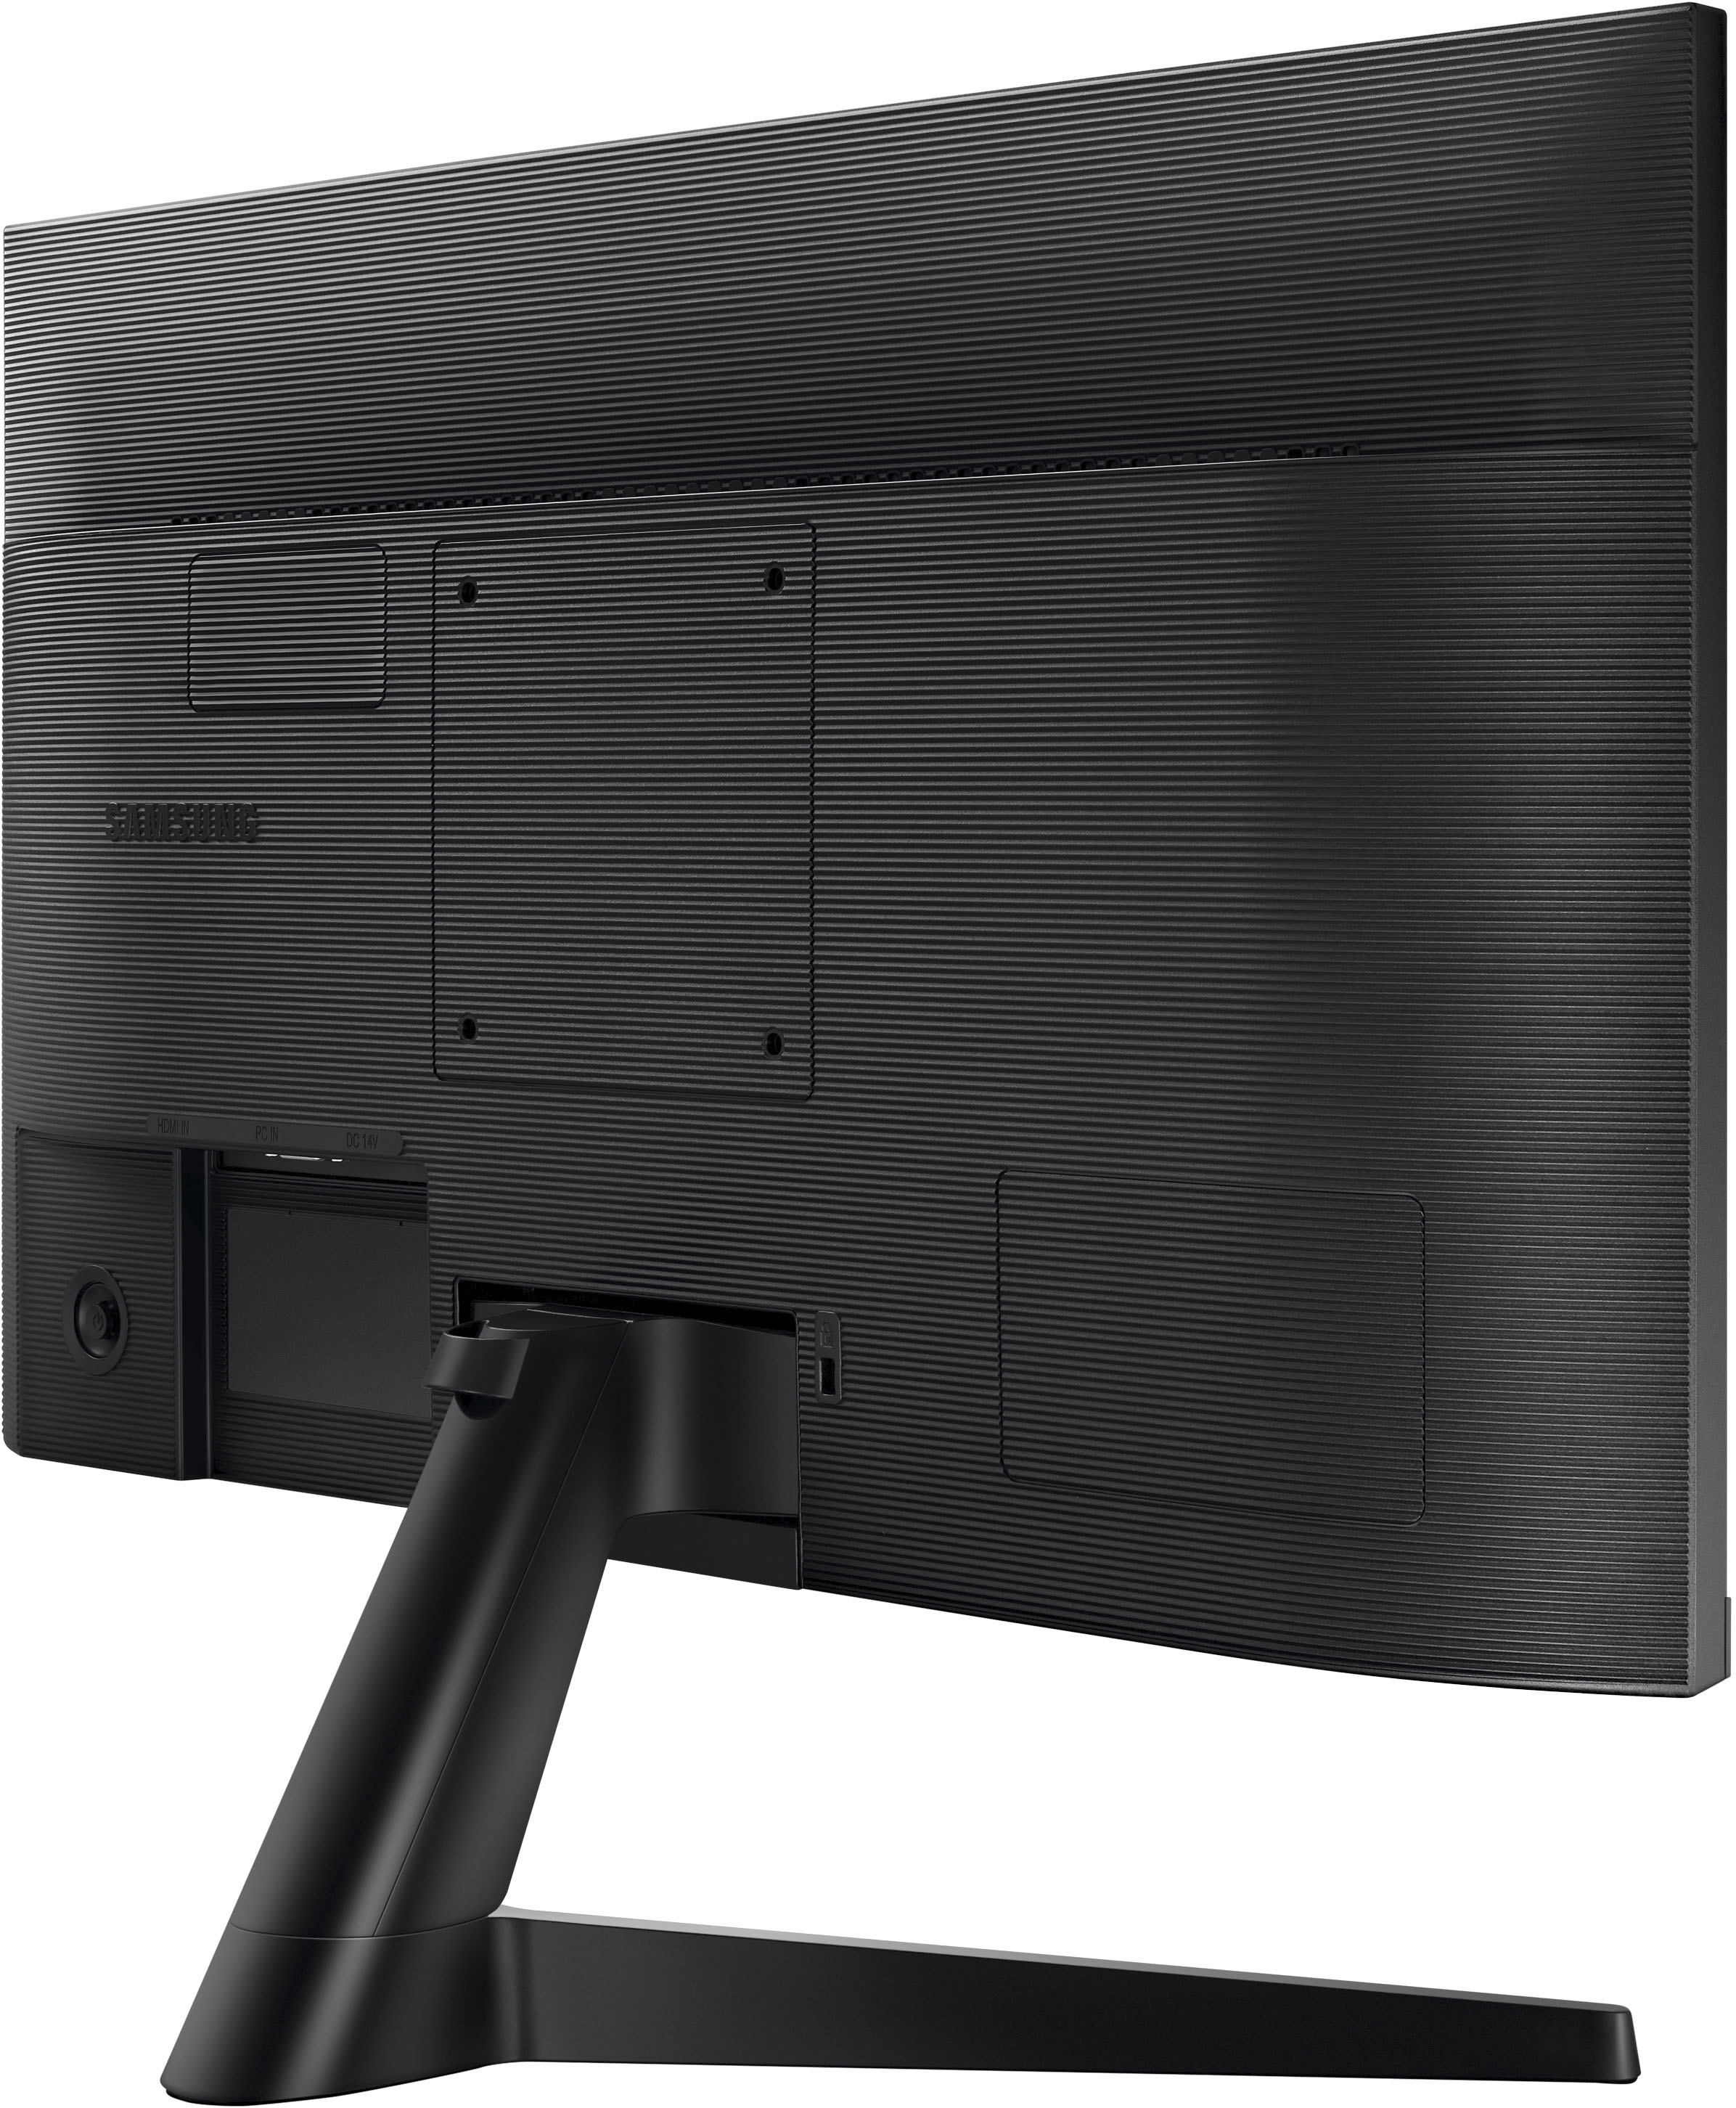 Samsung 24 Fhd Ips Computer Monitor, Amd Freesync, Hdmi & Vga (t350  Series) - Dark Blue/gray : Target